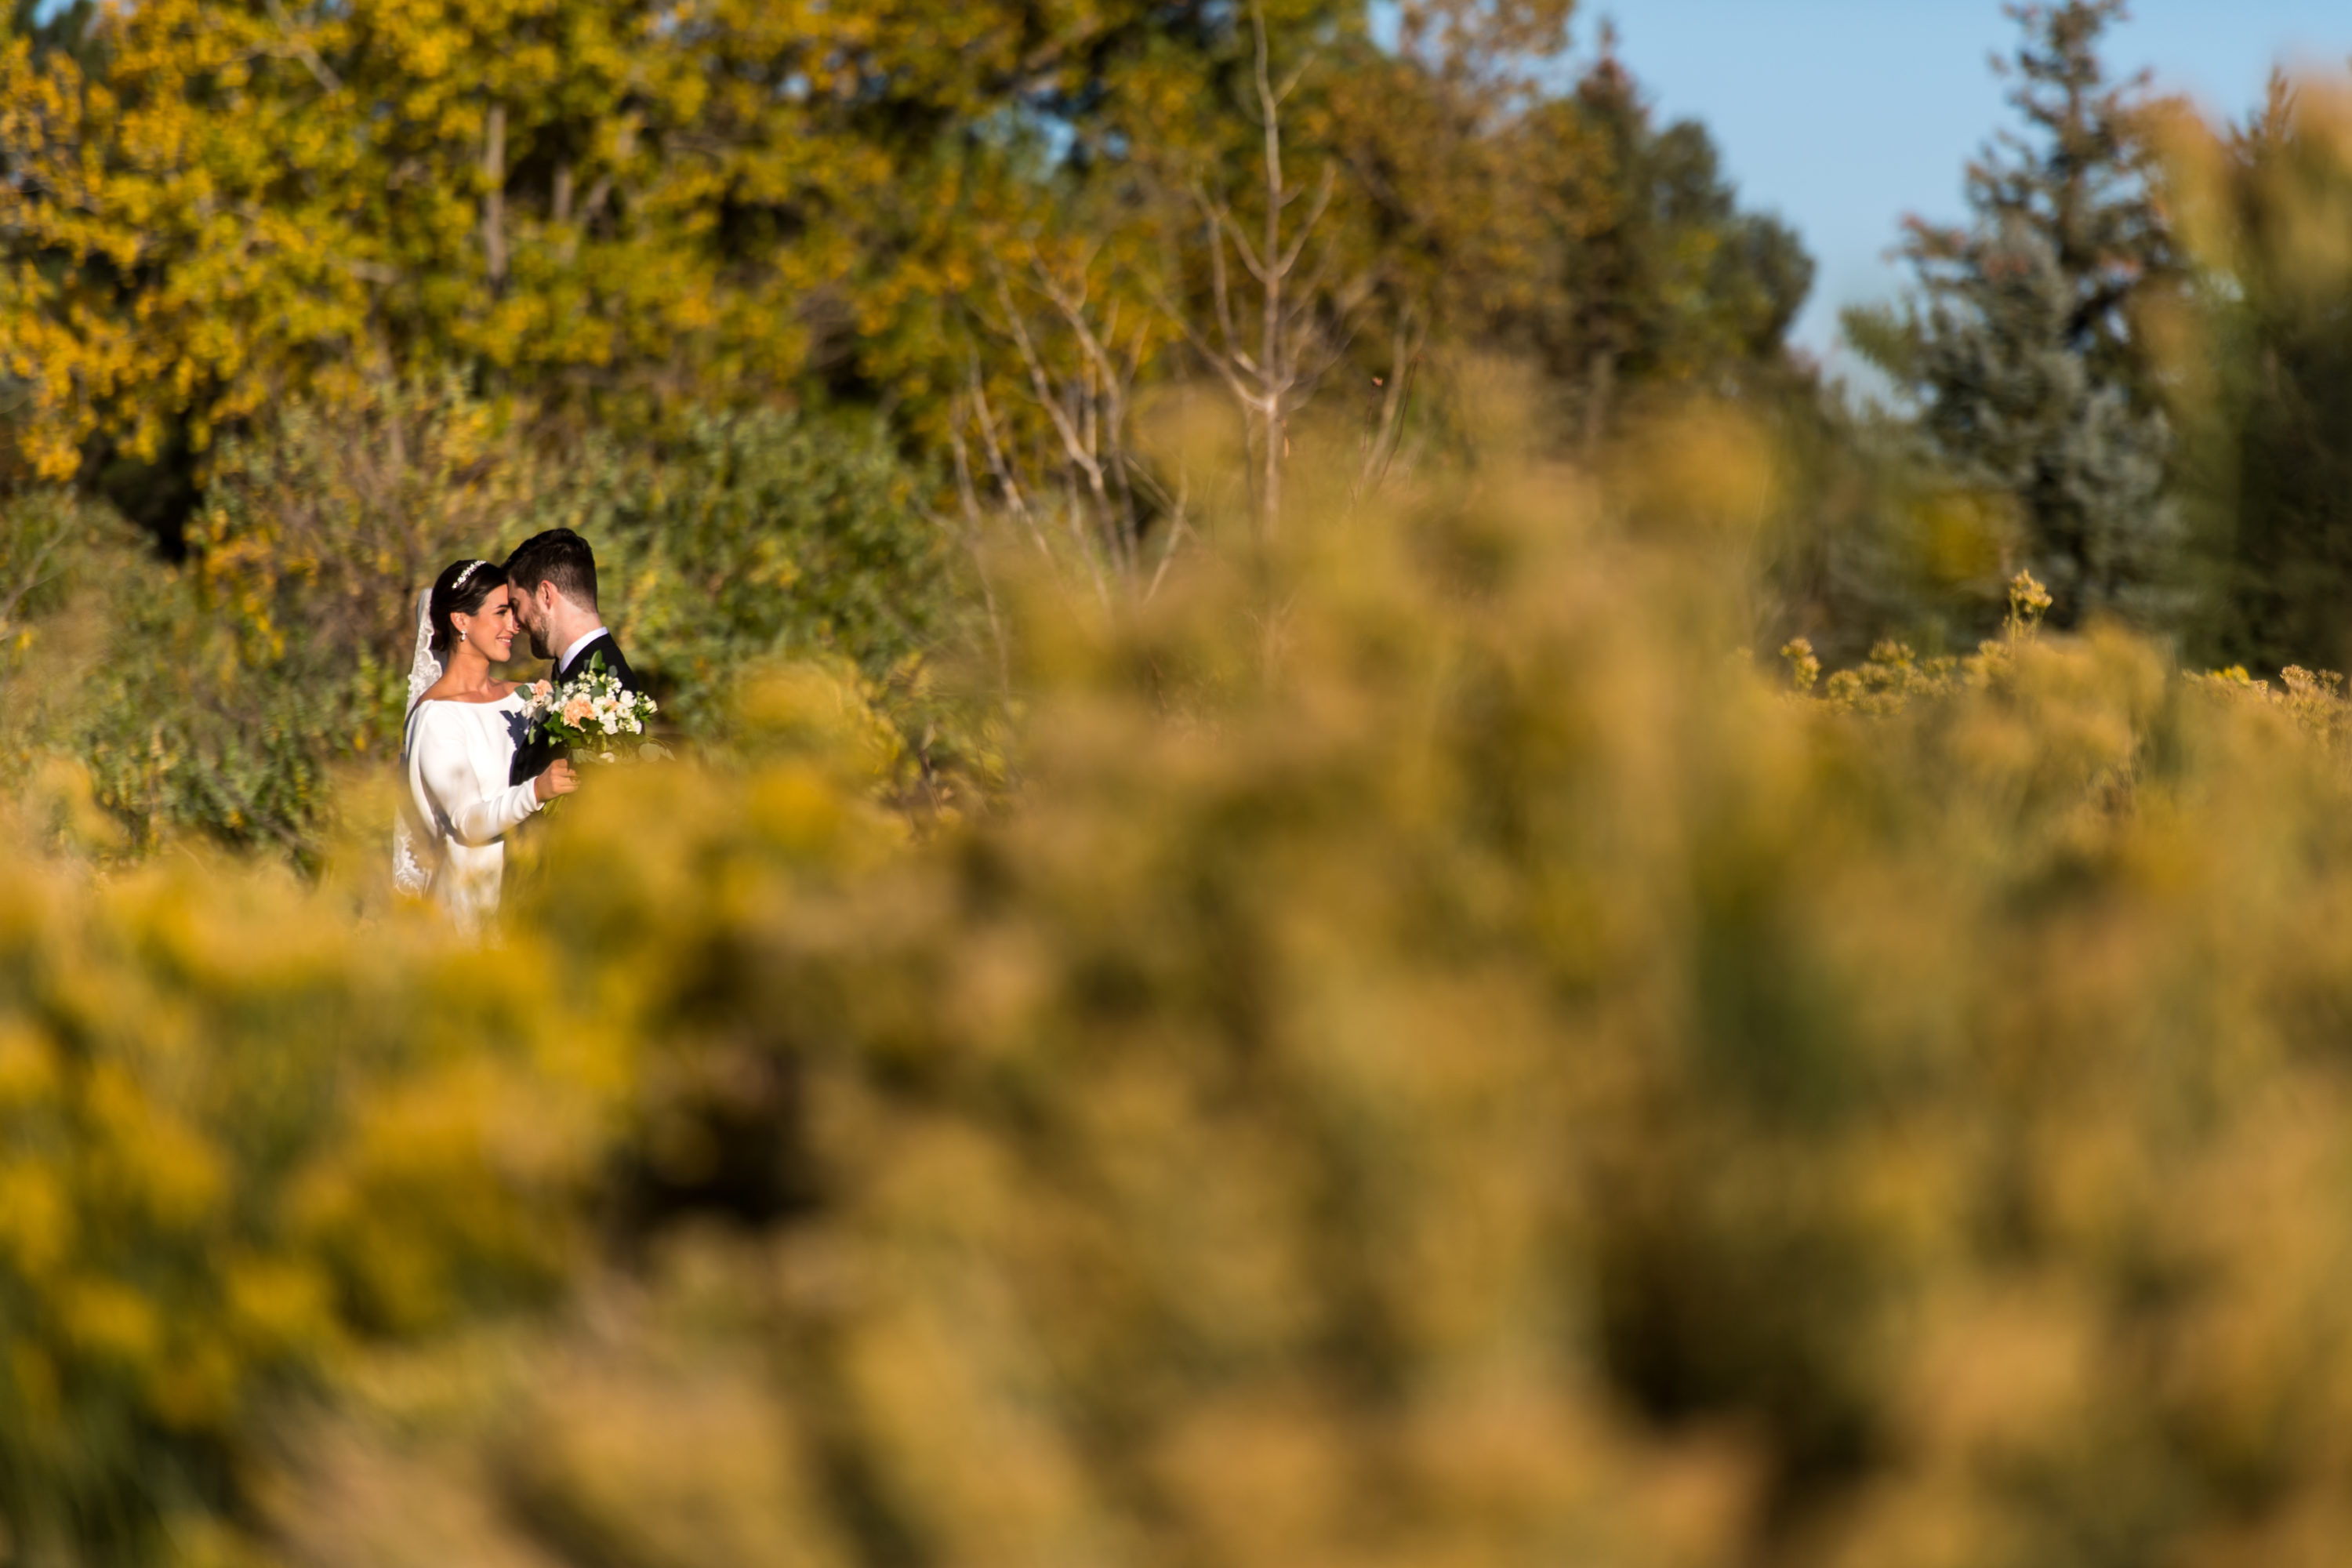 Bride and groom pose during wedding photo portraits at Belmar Park in Lakewood, Colorado.